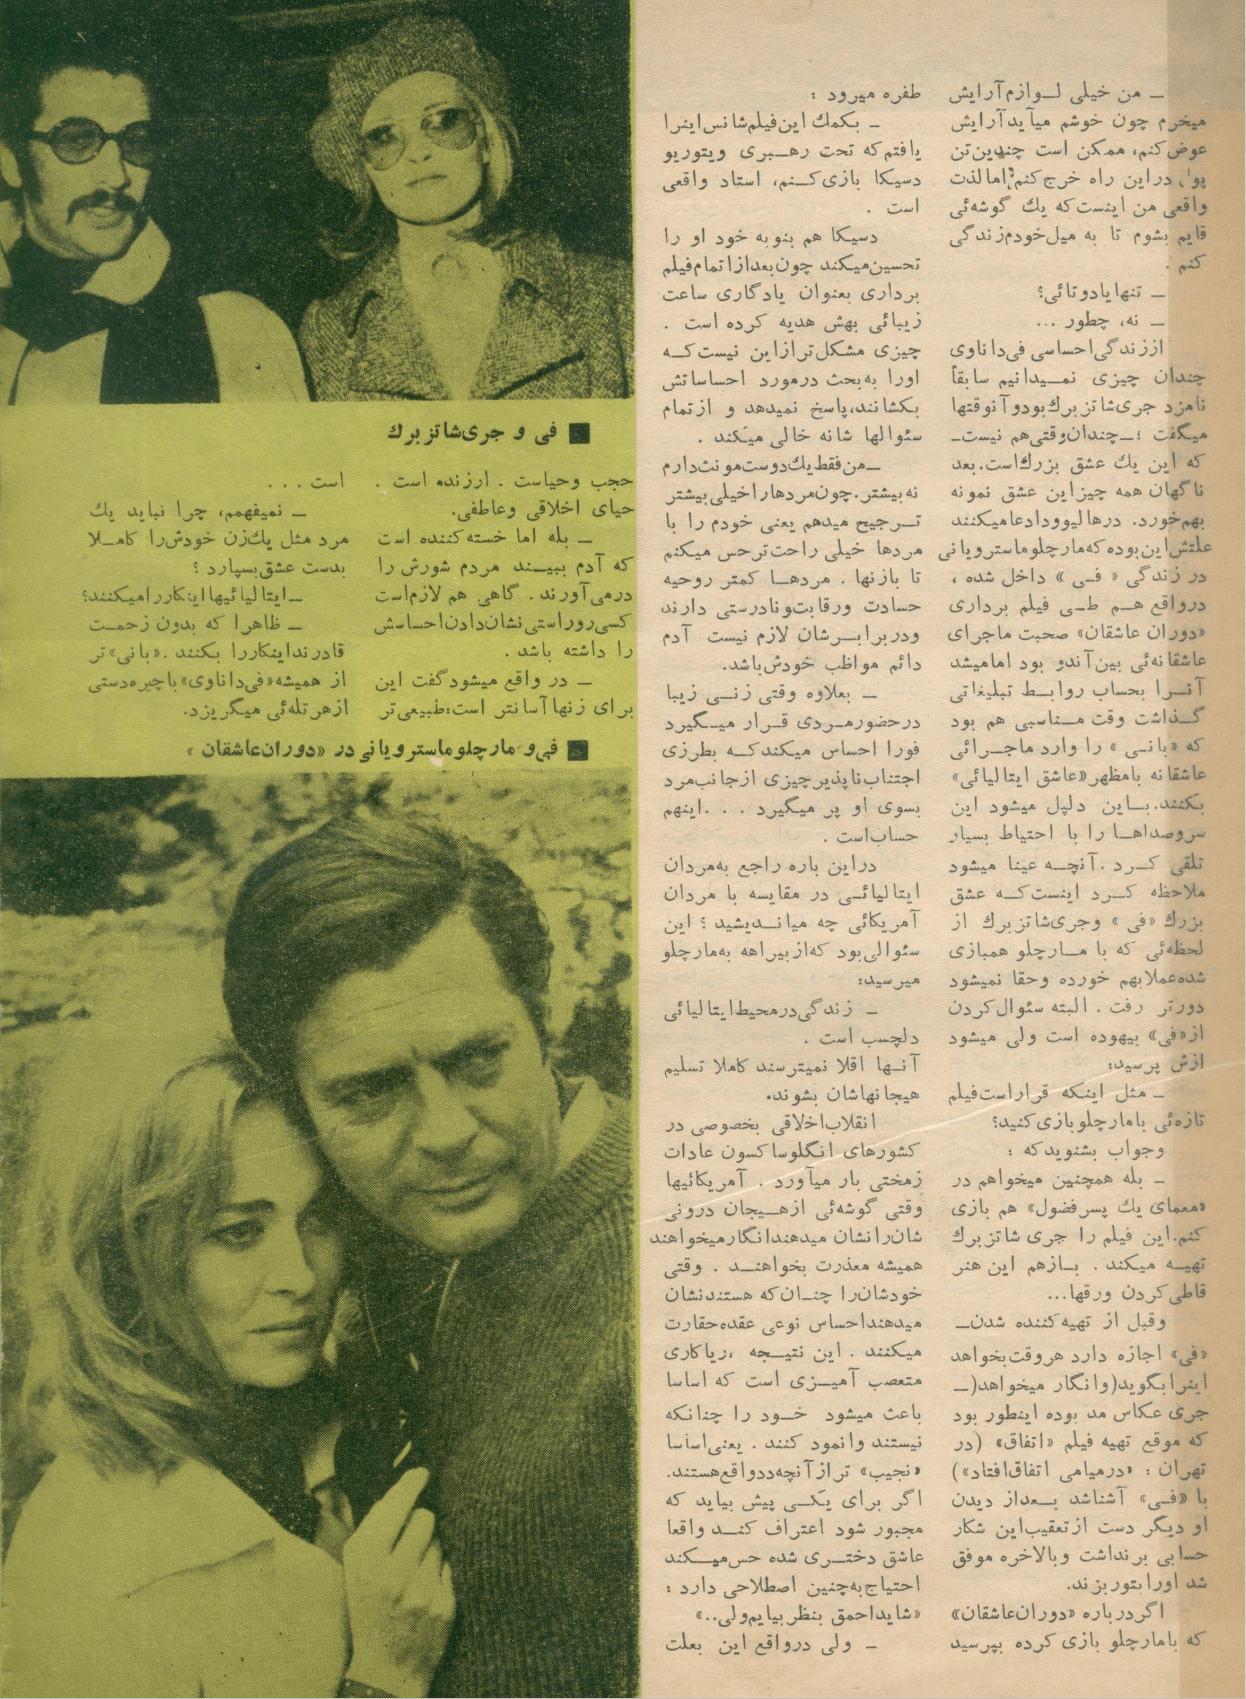 Cinema Star (April 9, 1969) - KHAJISTAN™